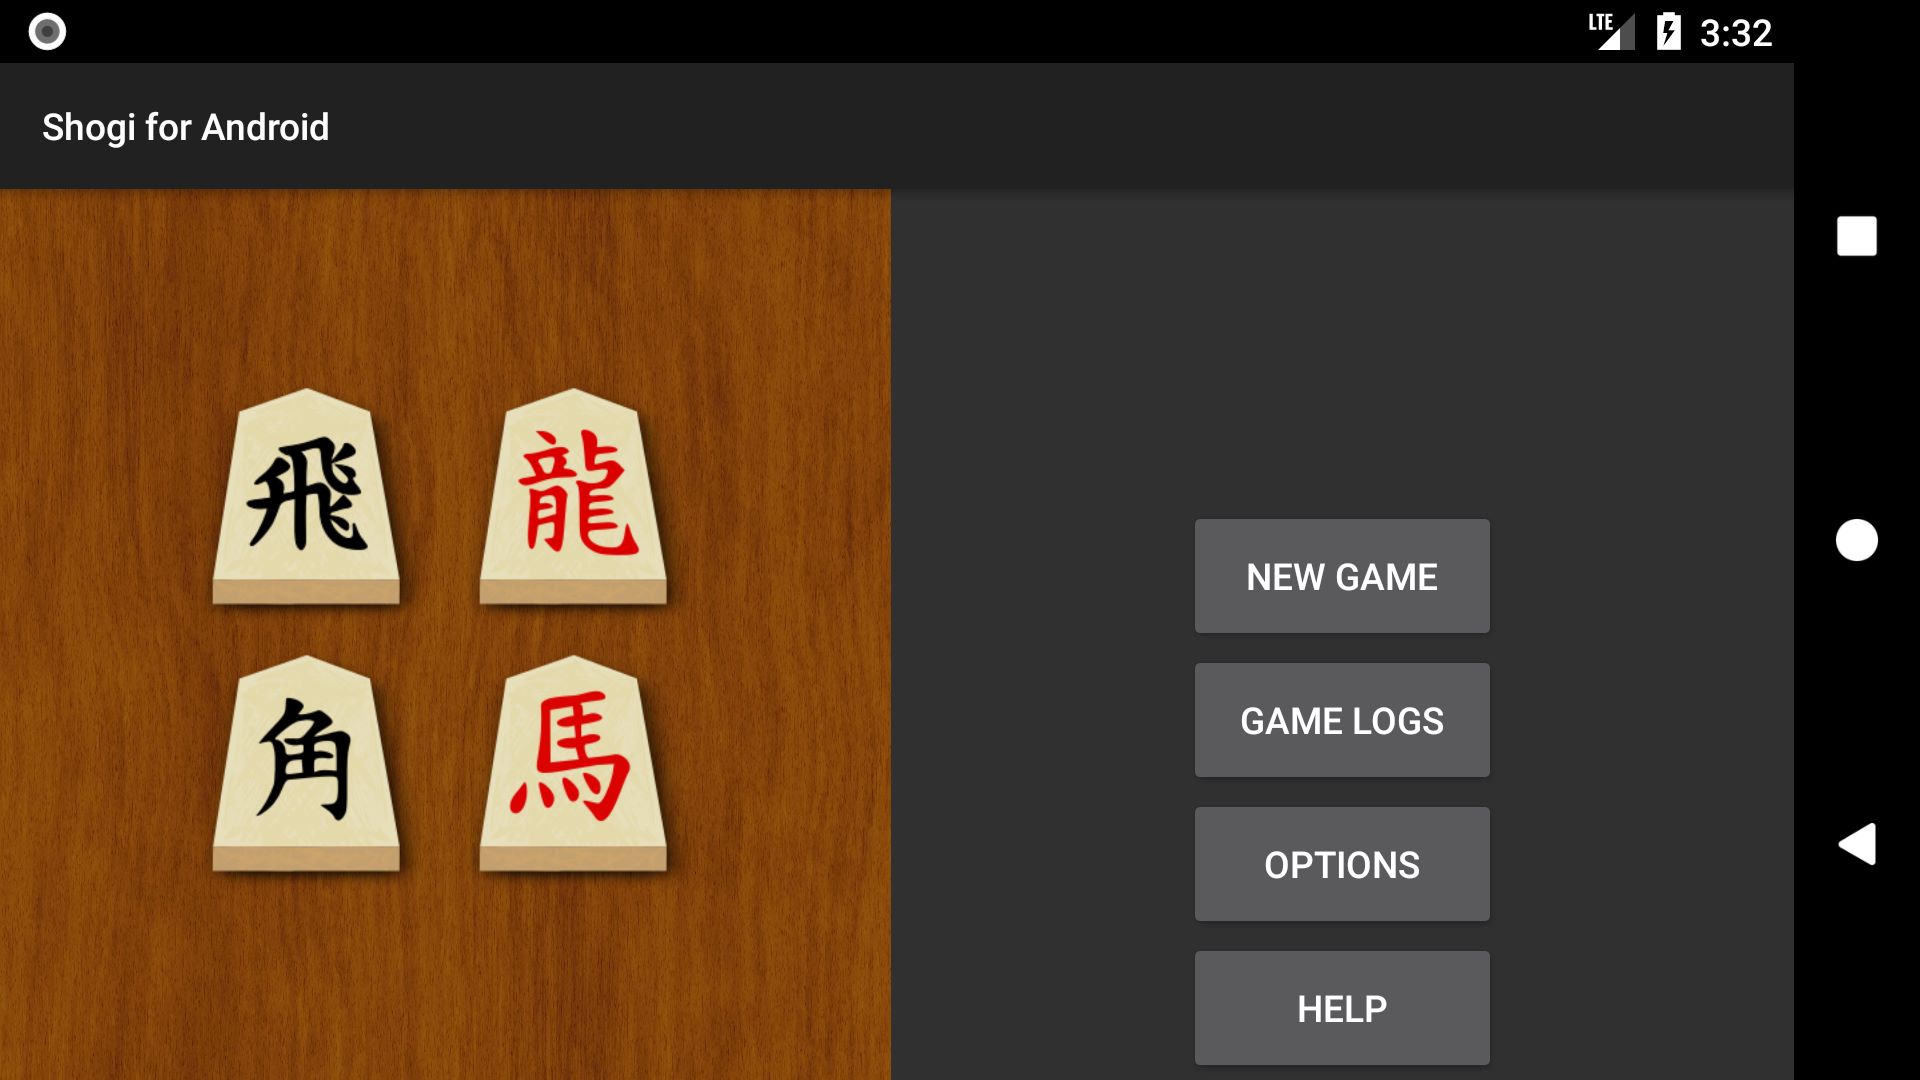 The Hasami Shogi na App Store